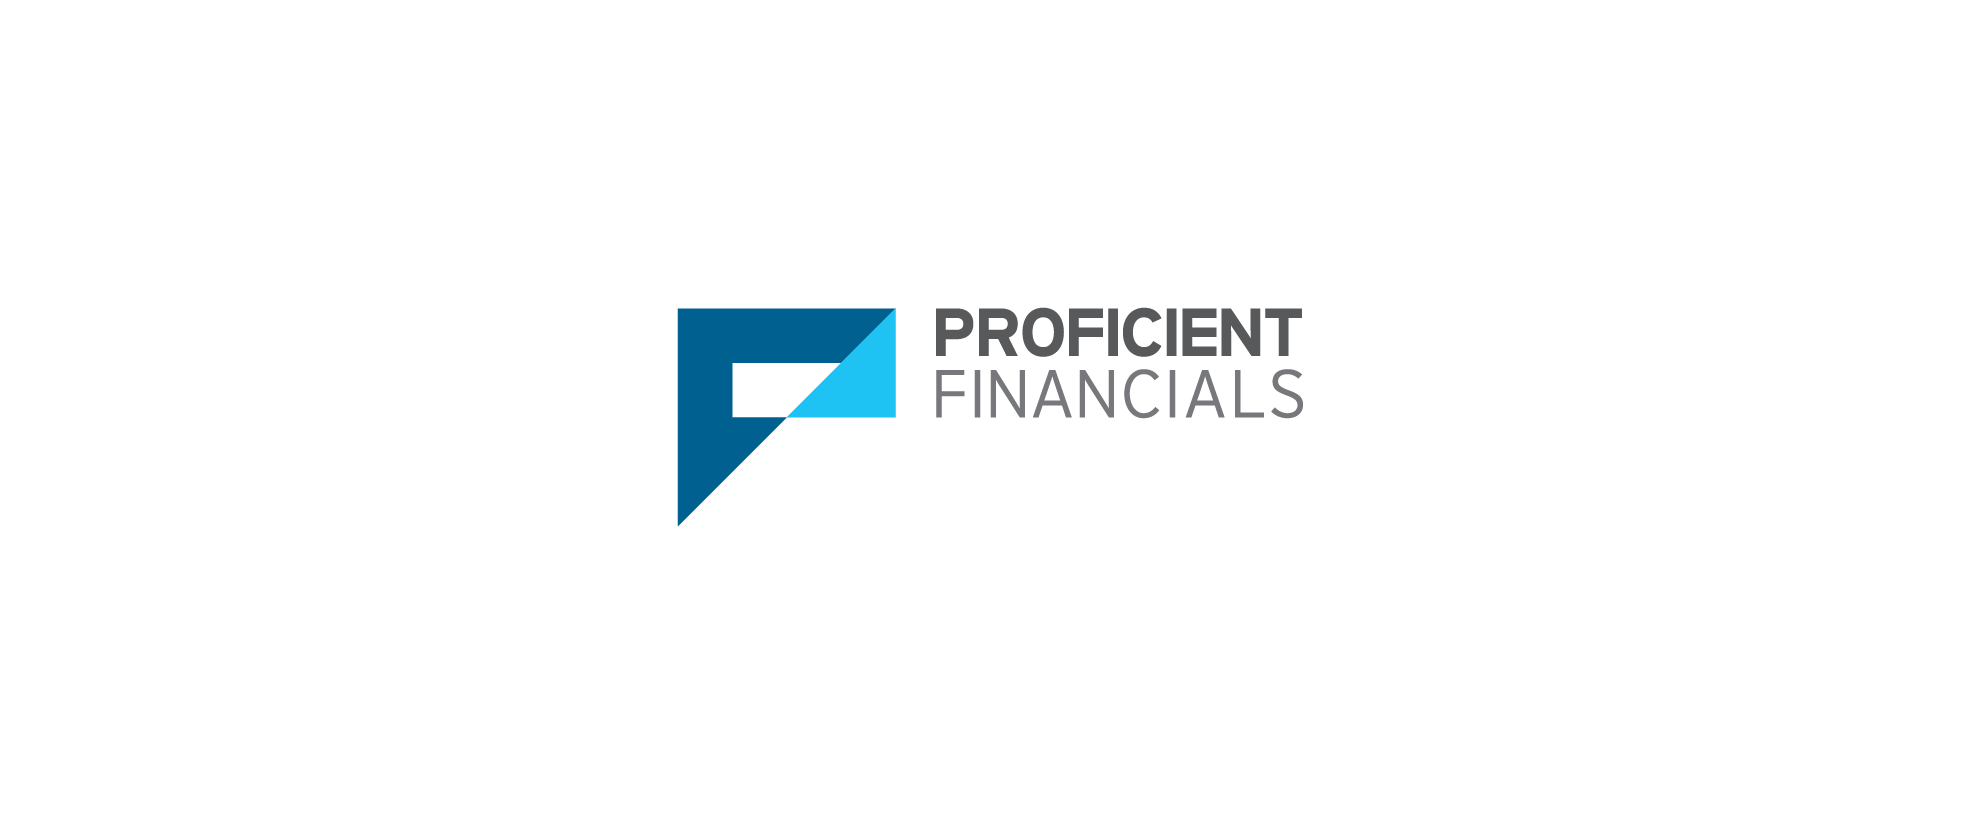 proficient-financials_brandmark_mockup-02